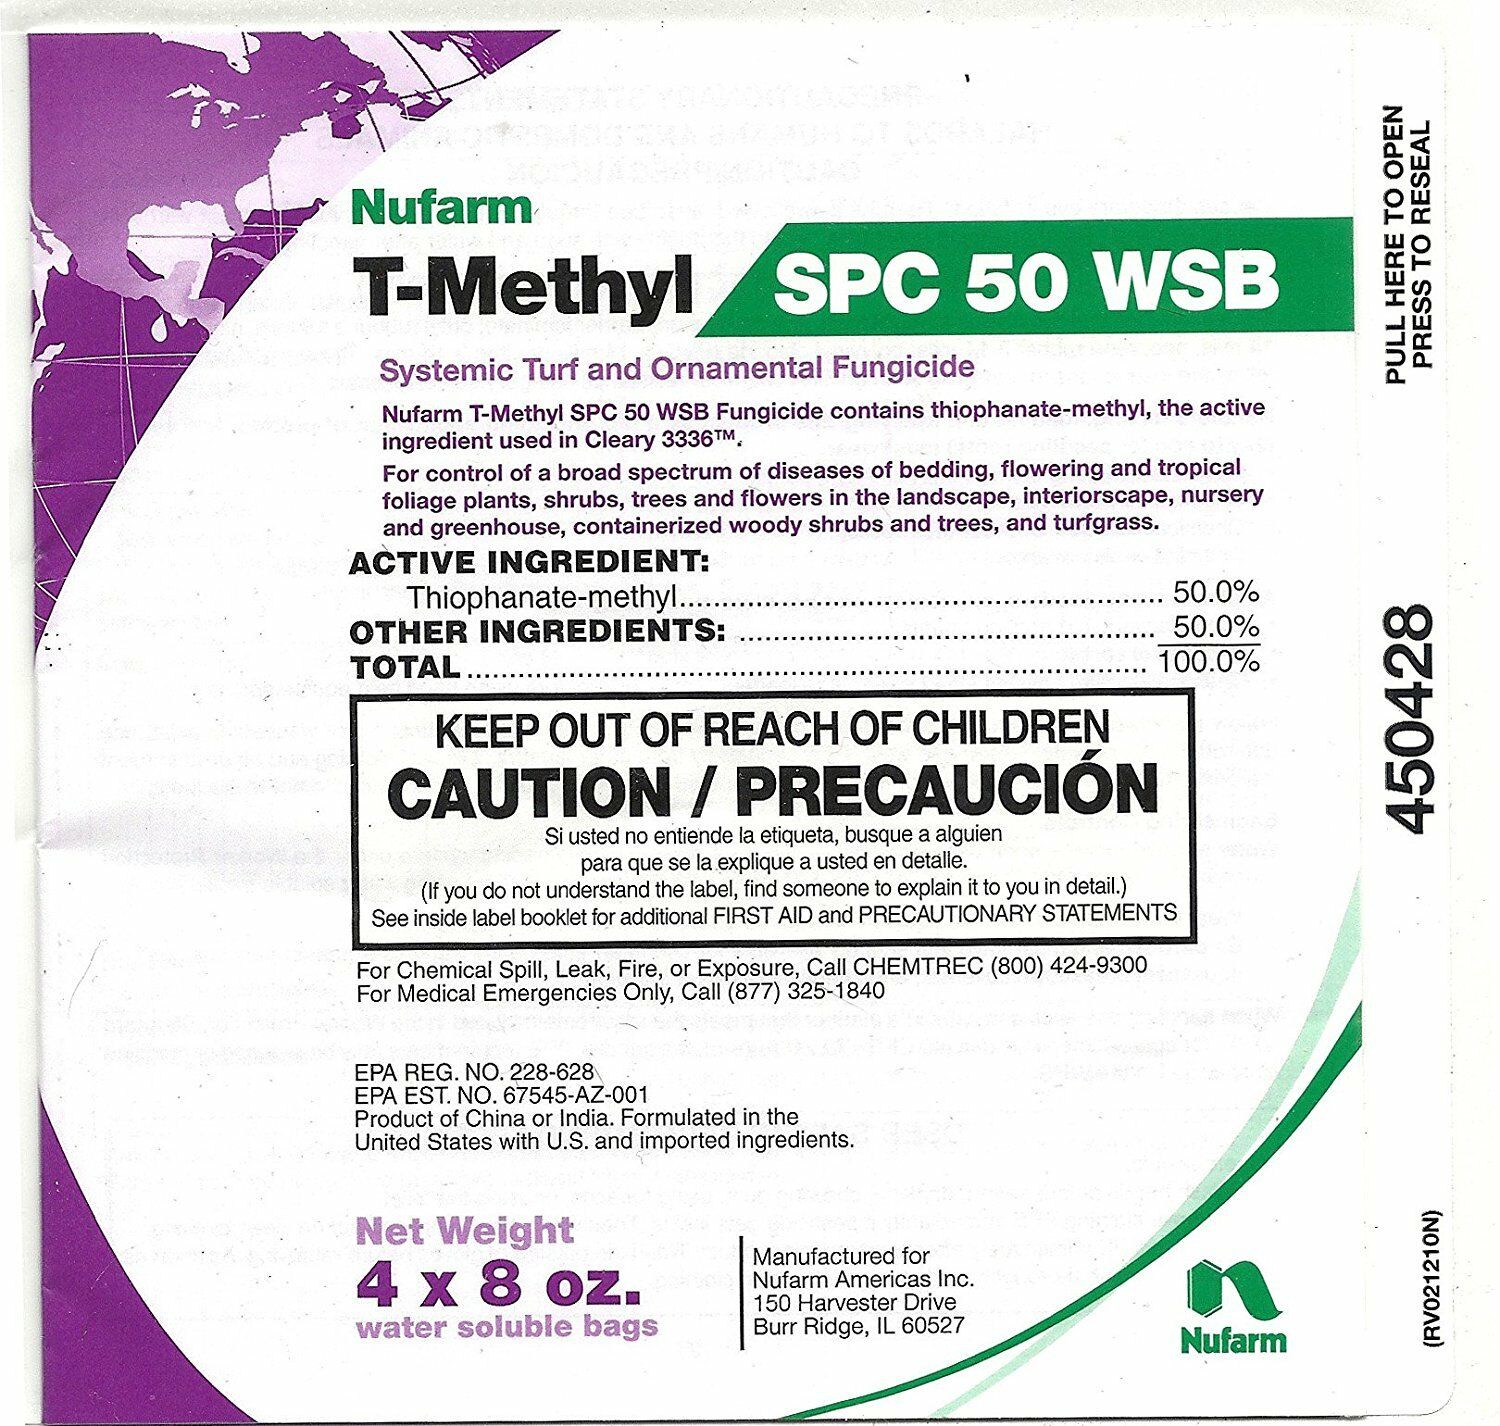 T-Methyl E-Pro Fungicide - 2 lb Bag - Fungicides